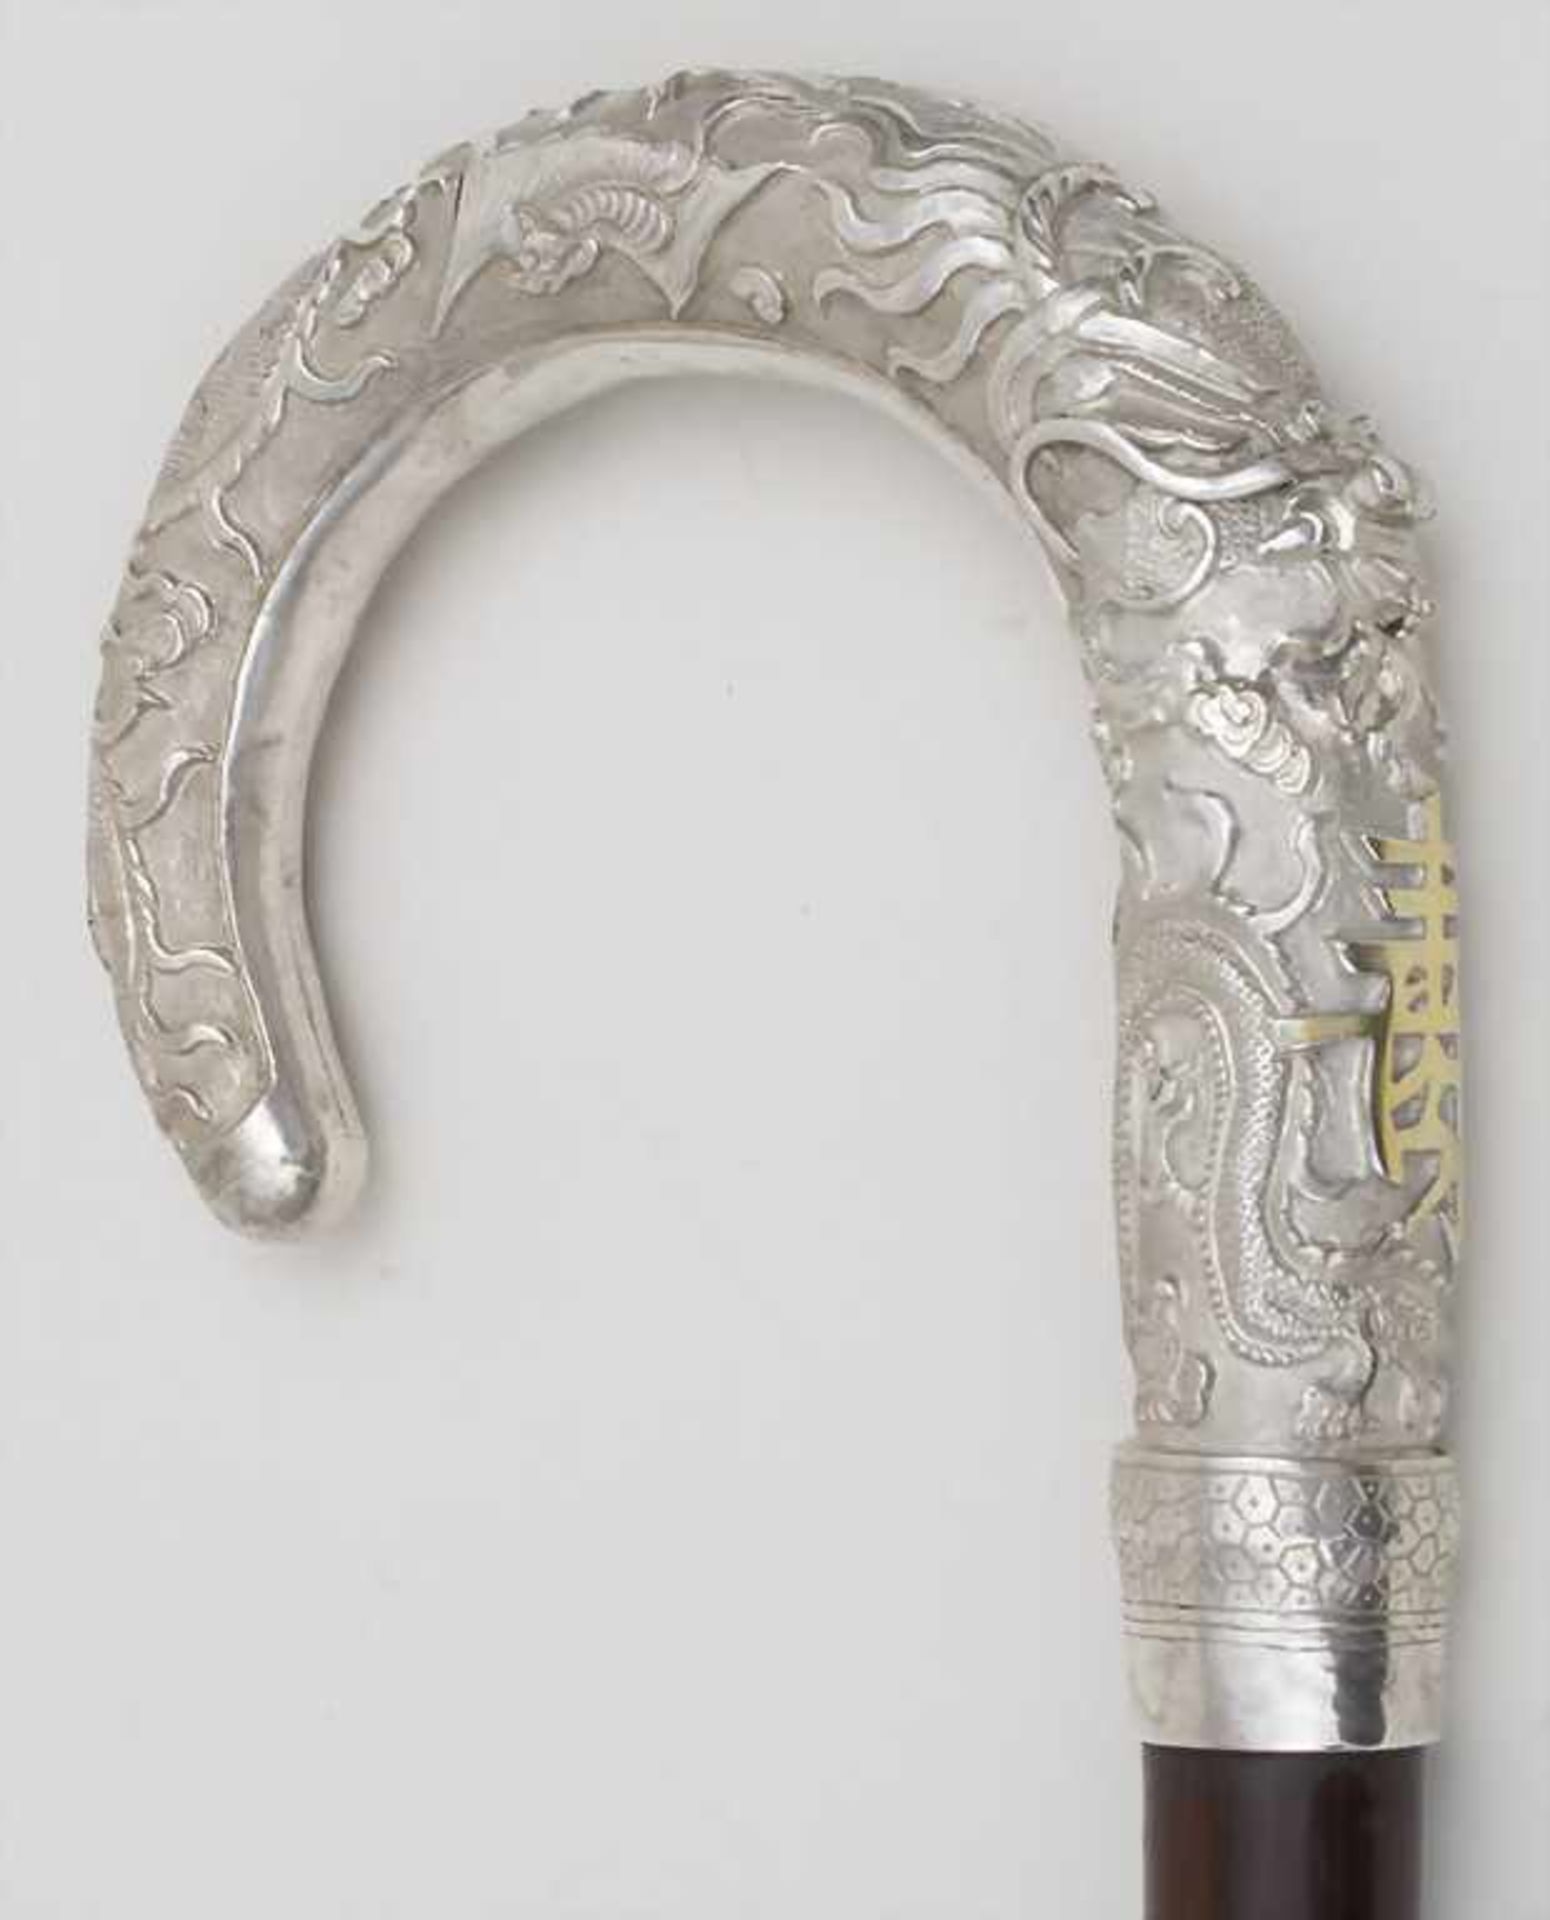 Gehstock mit Drachenmotiv / A cane with dragon handle, China (Hong Kong), um 1900Material: Silber - Bild 3 aus 4